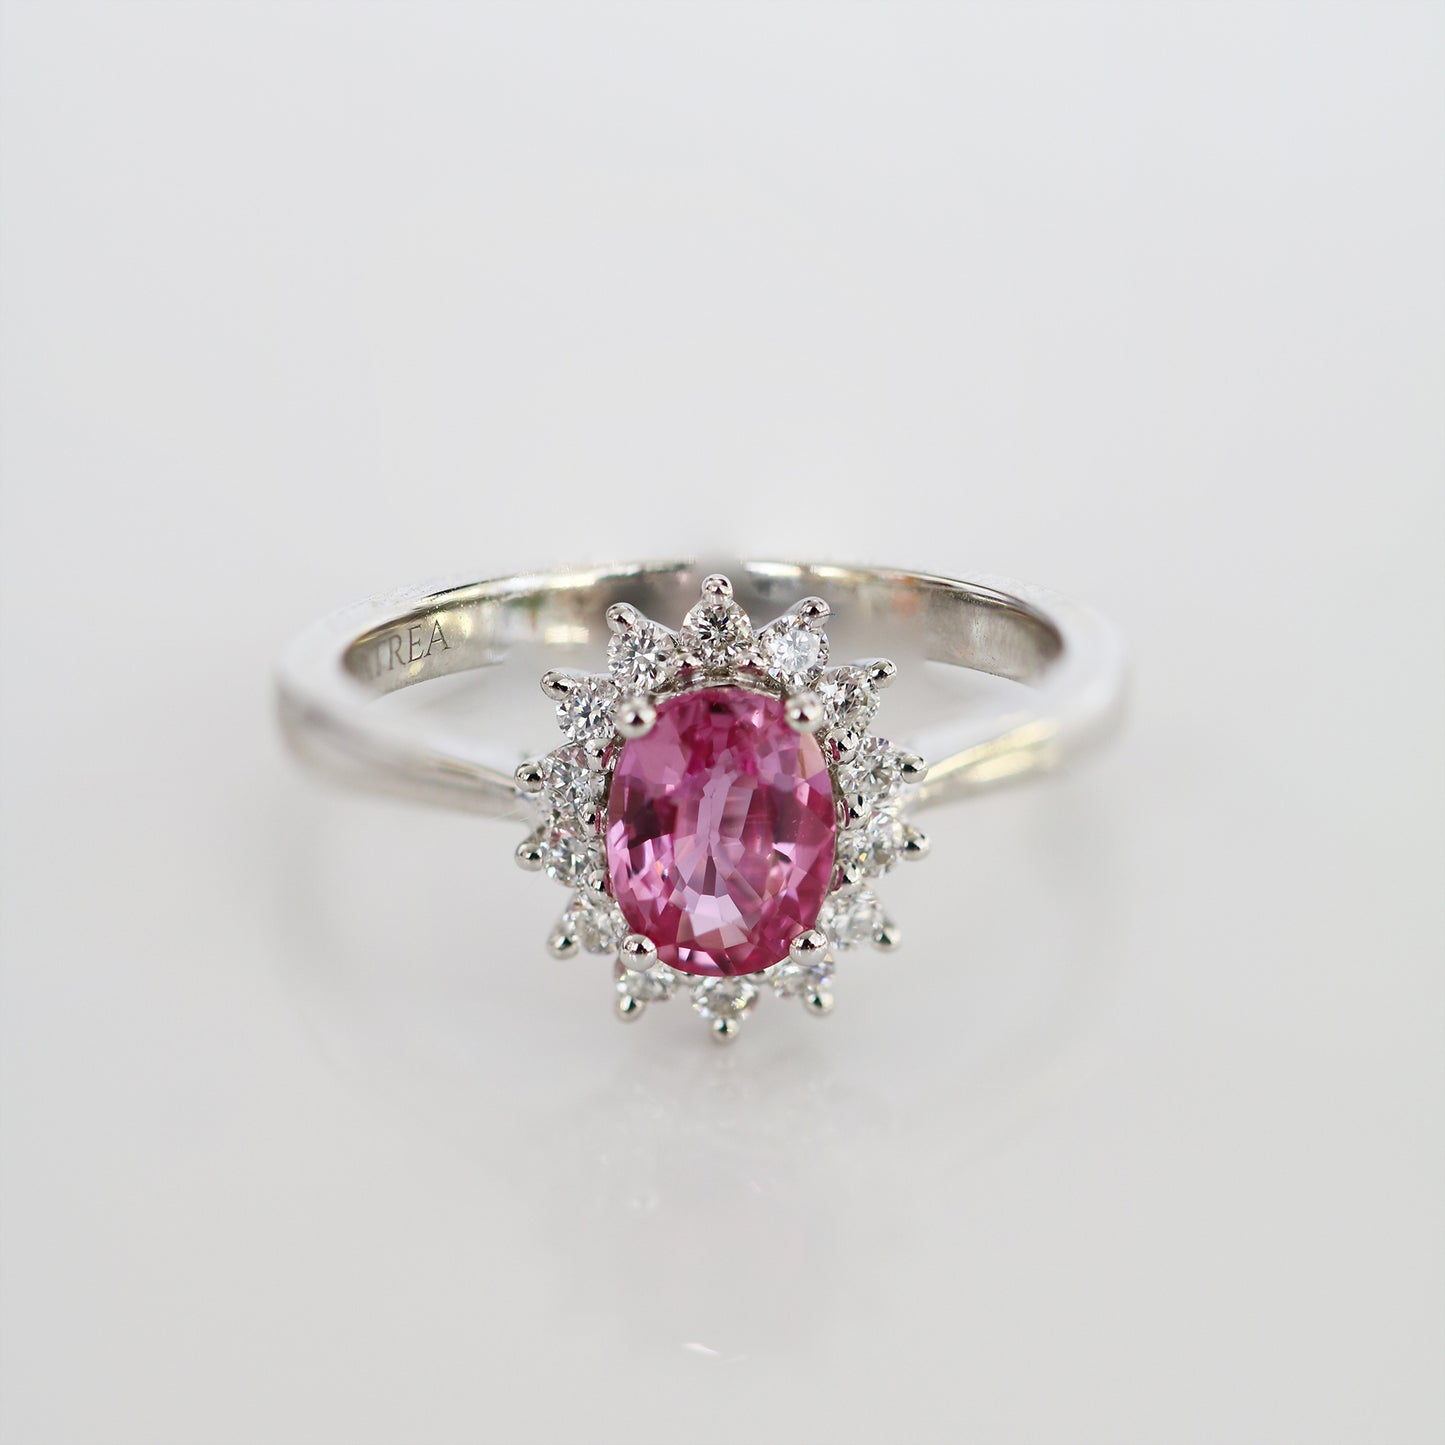 白金粉紅藍寶石戒指側面 White Gold Pink Sapphire Ring on side view